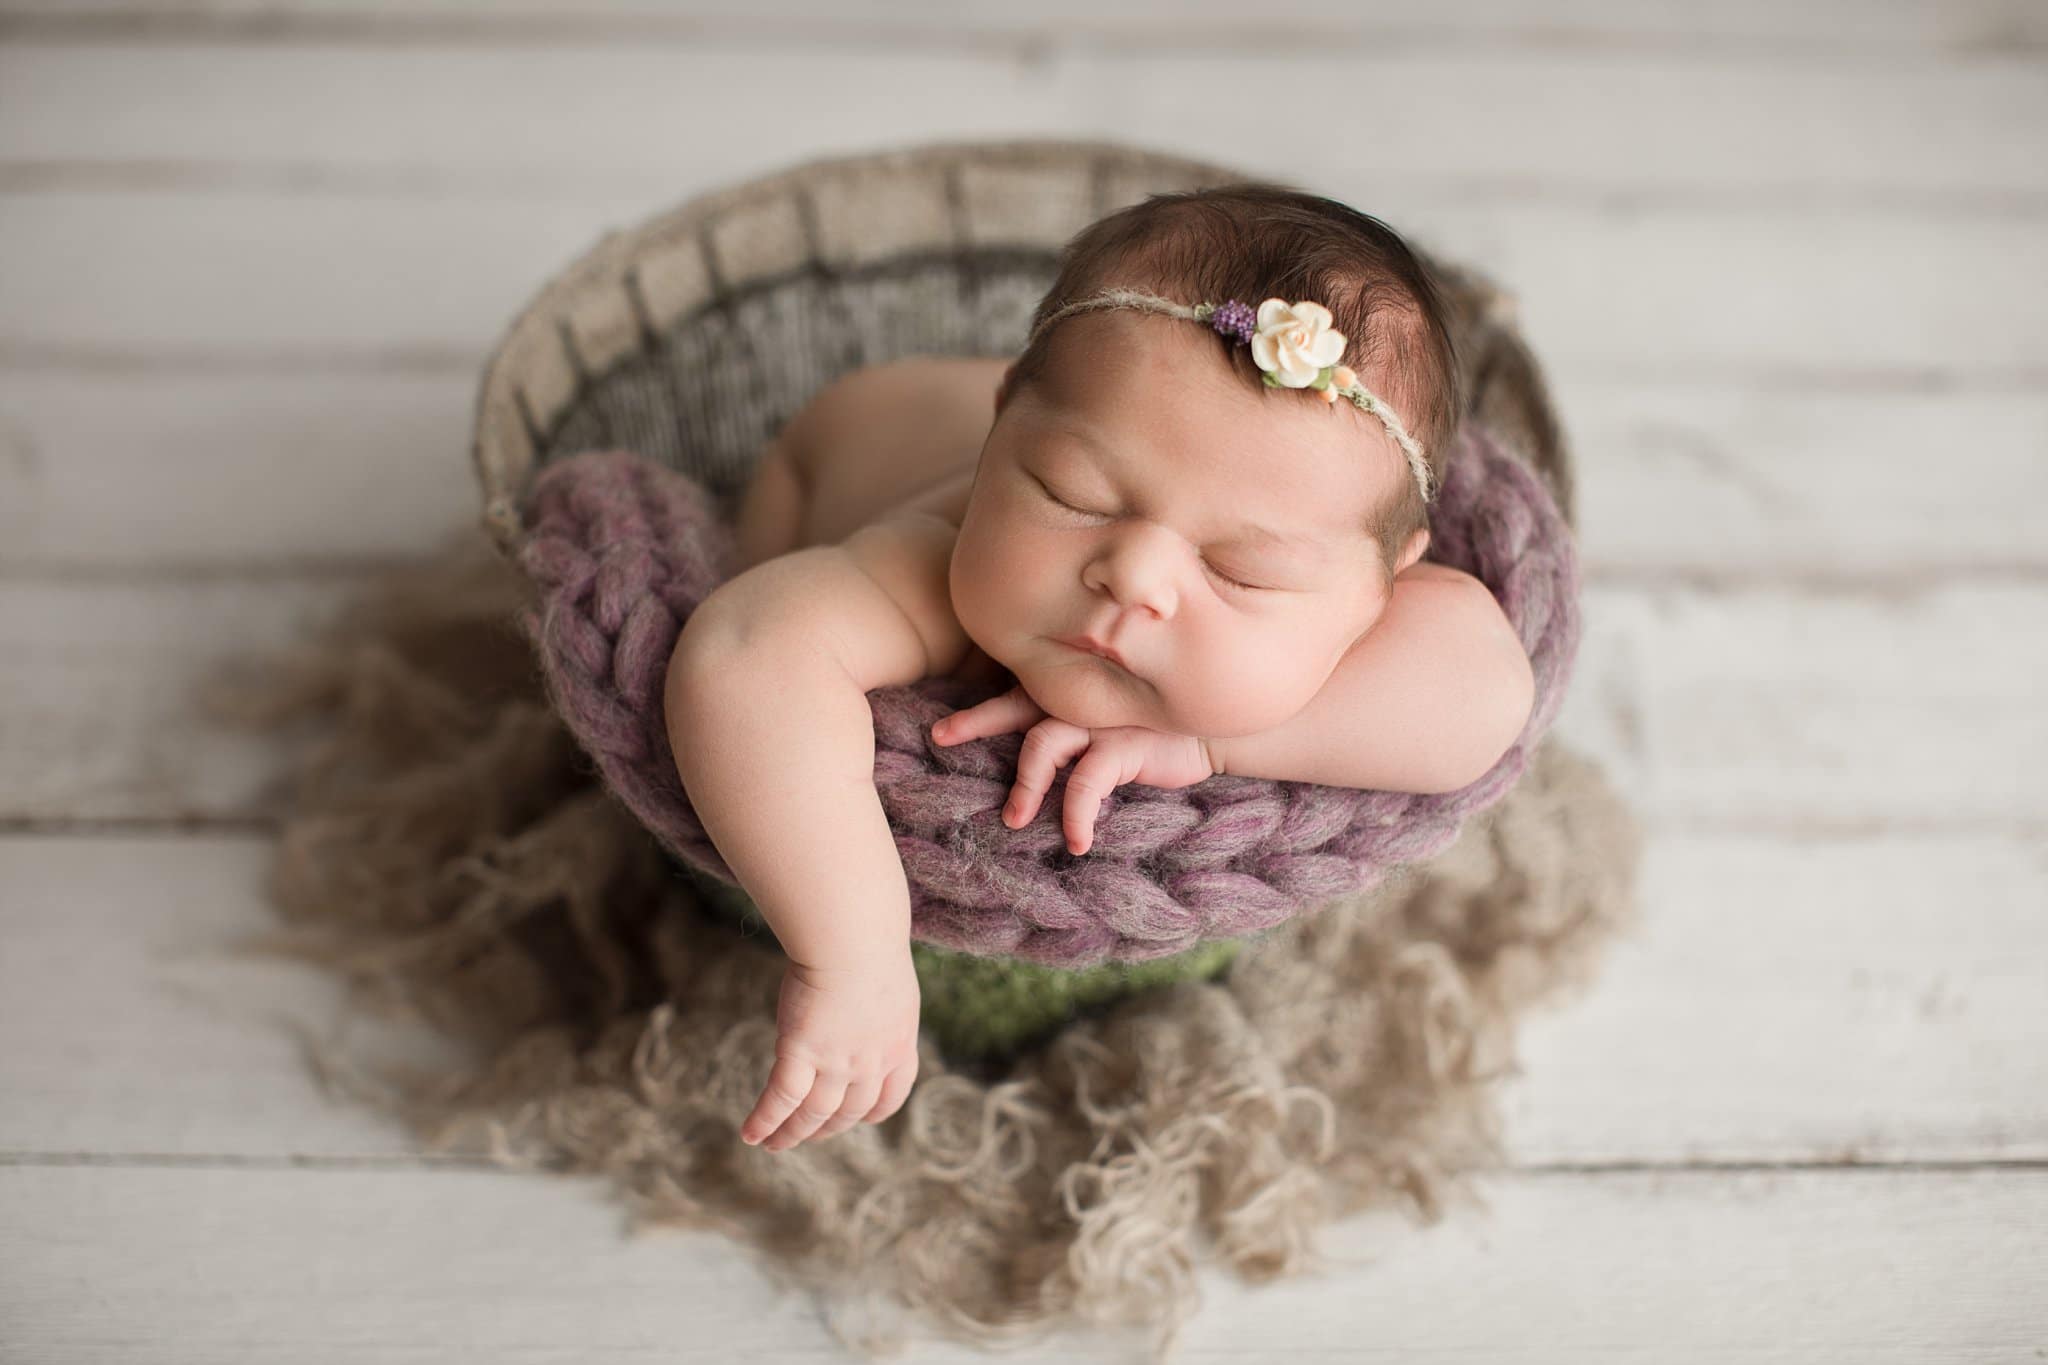 chubby cheek baby girl sleepin natural basket purple knit blanket New Baby Photos In Jacksonville